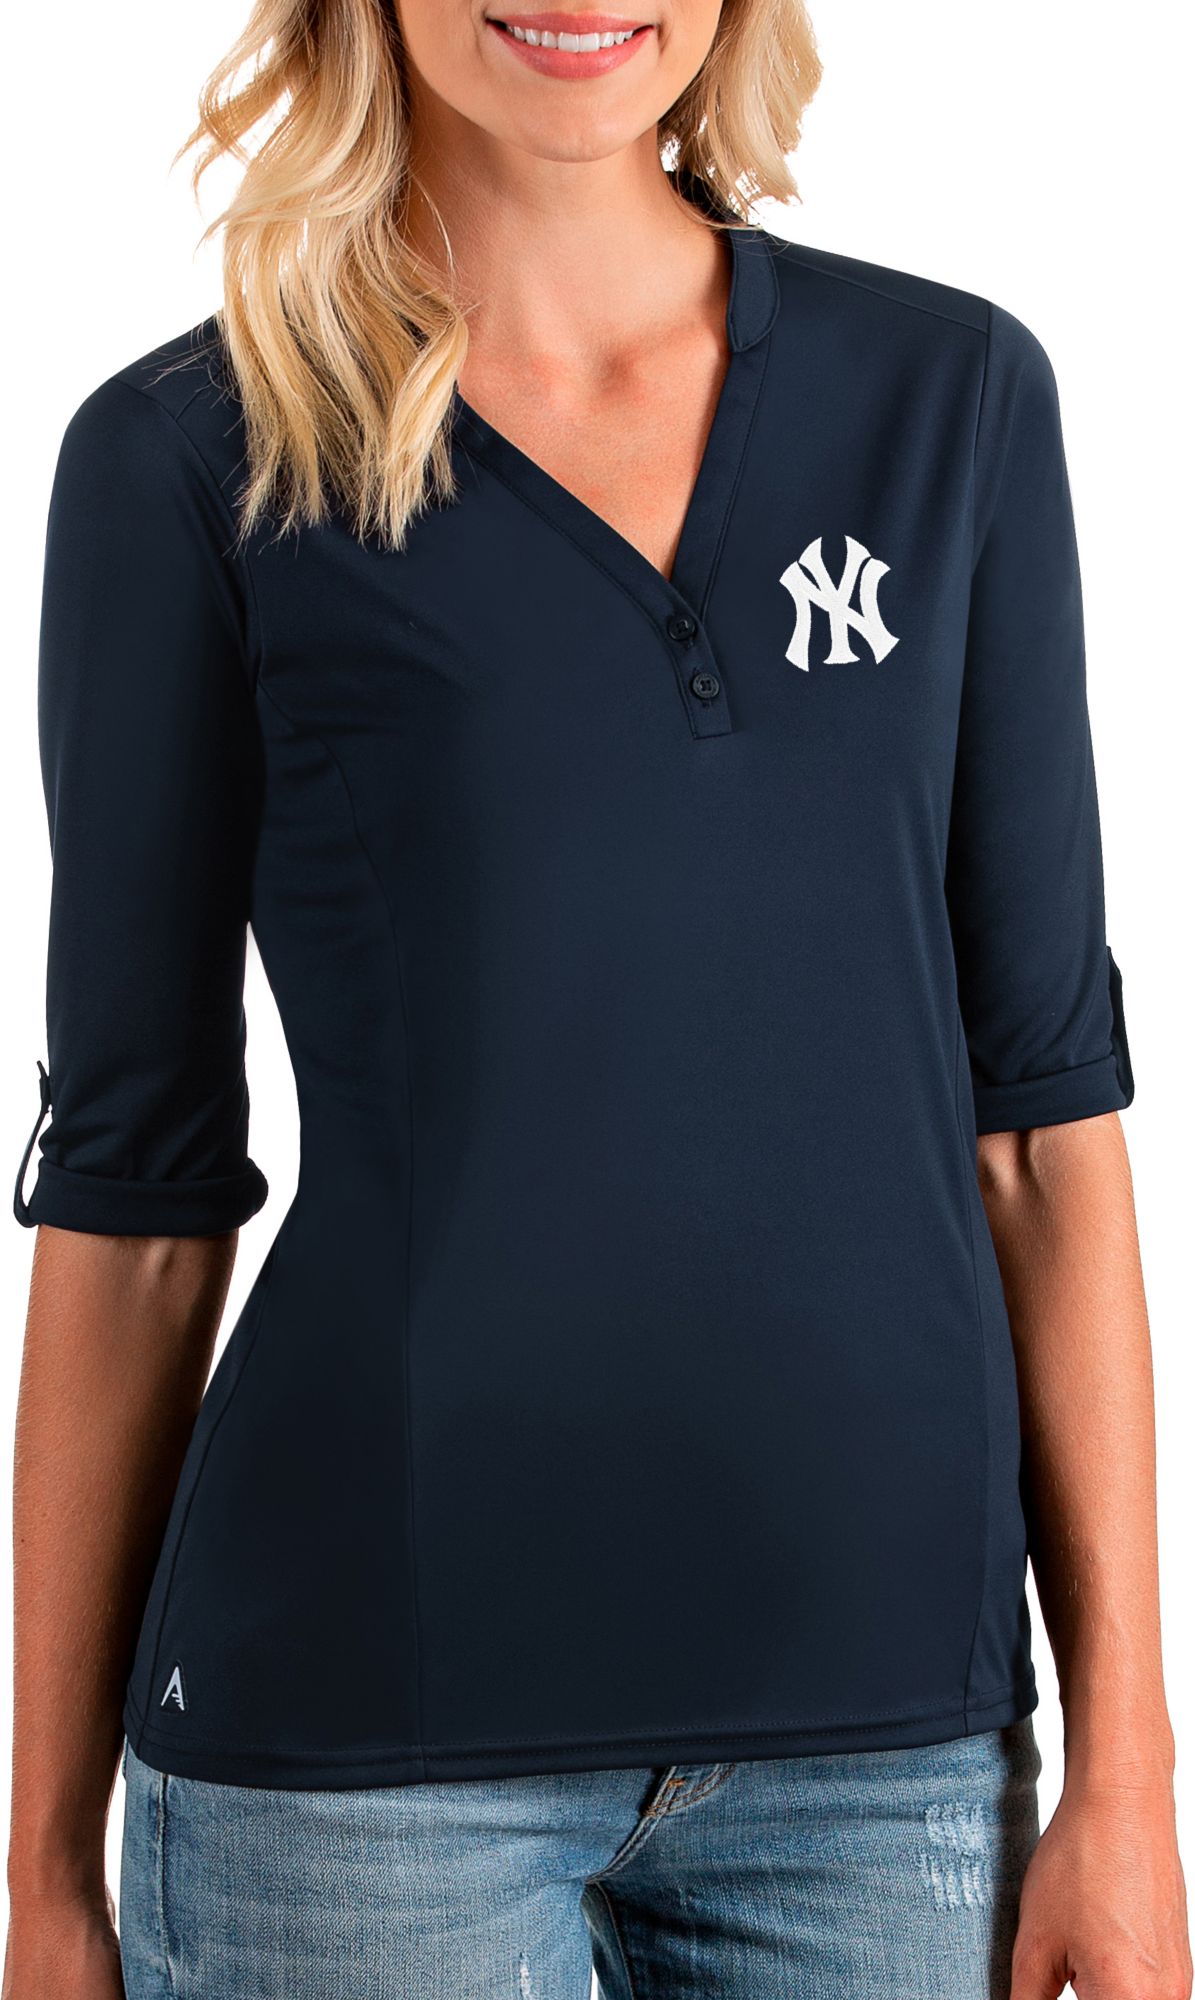 new york yankees women's apparel